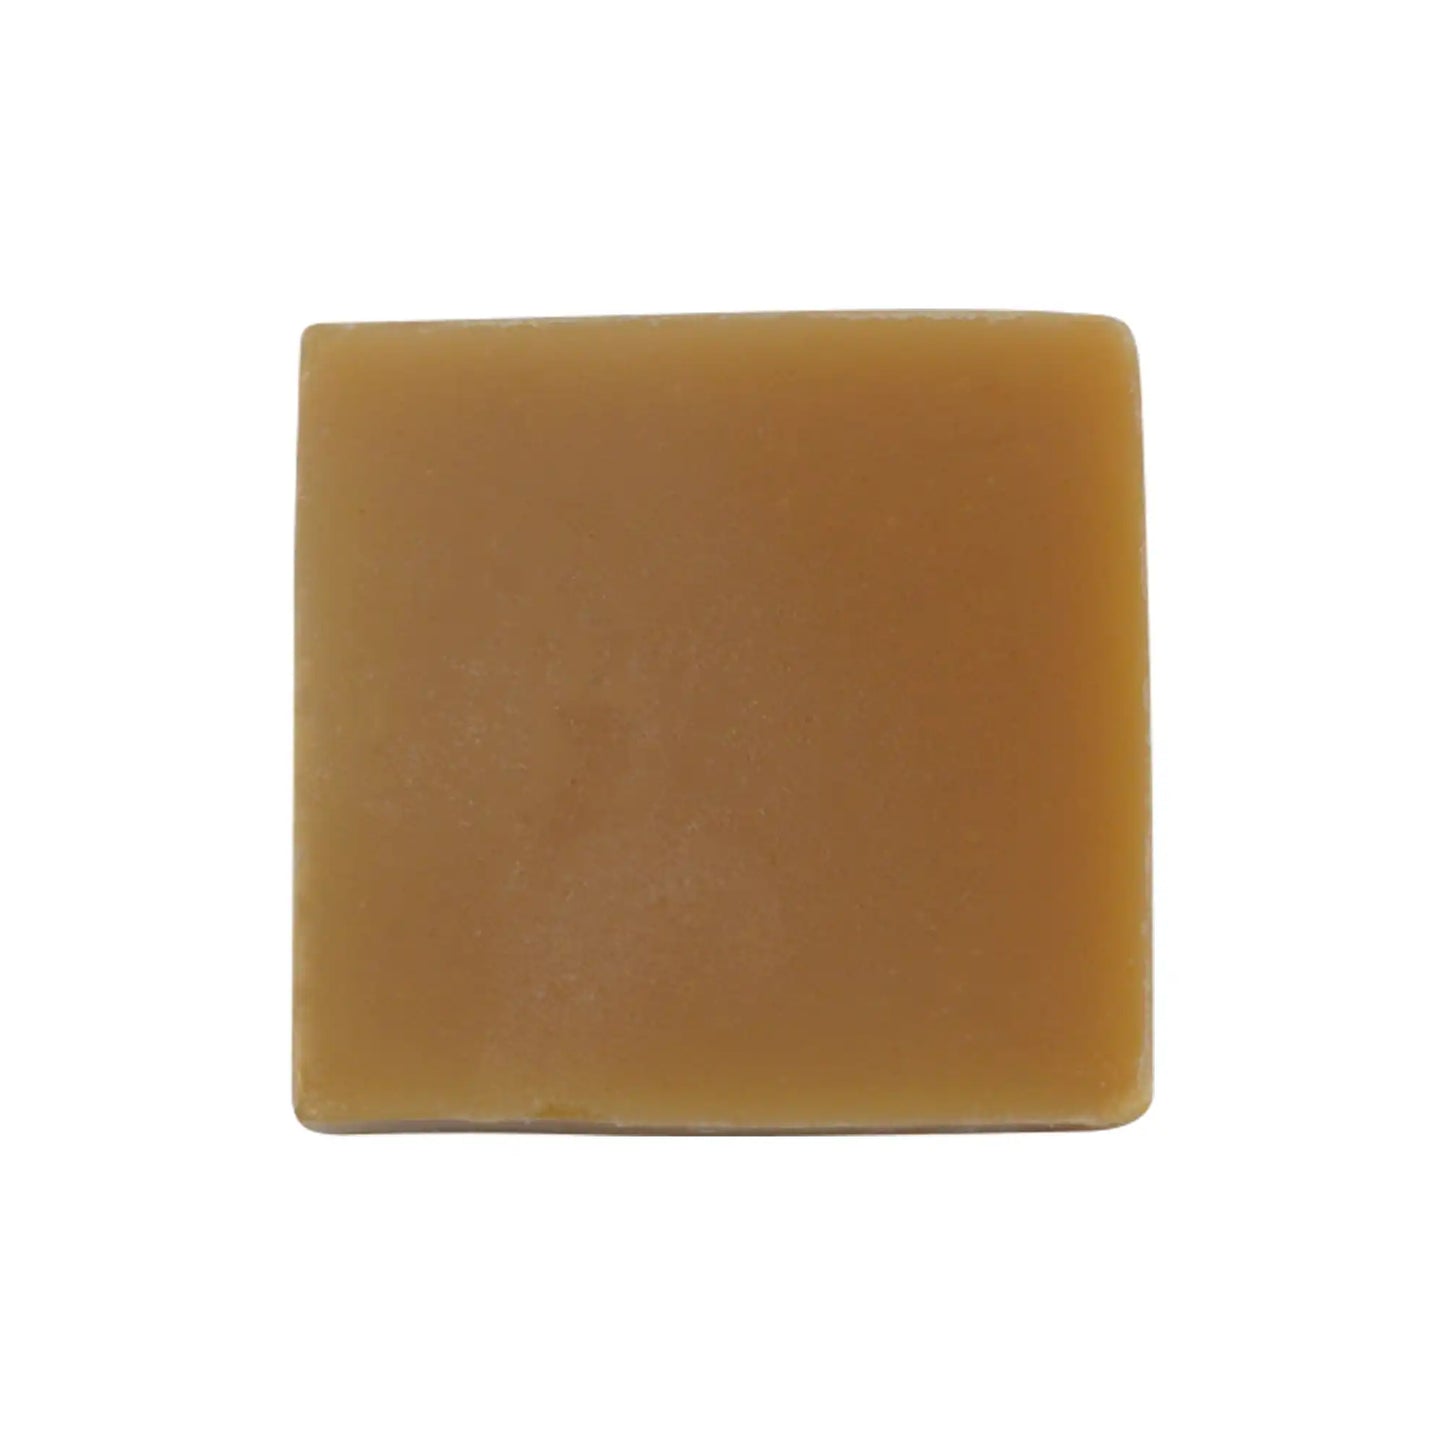 Natural Fresh Turmeric Soap - Texture Love and Tangle 